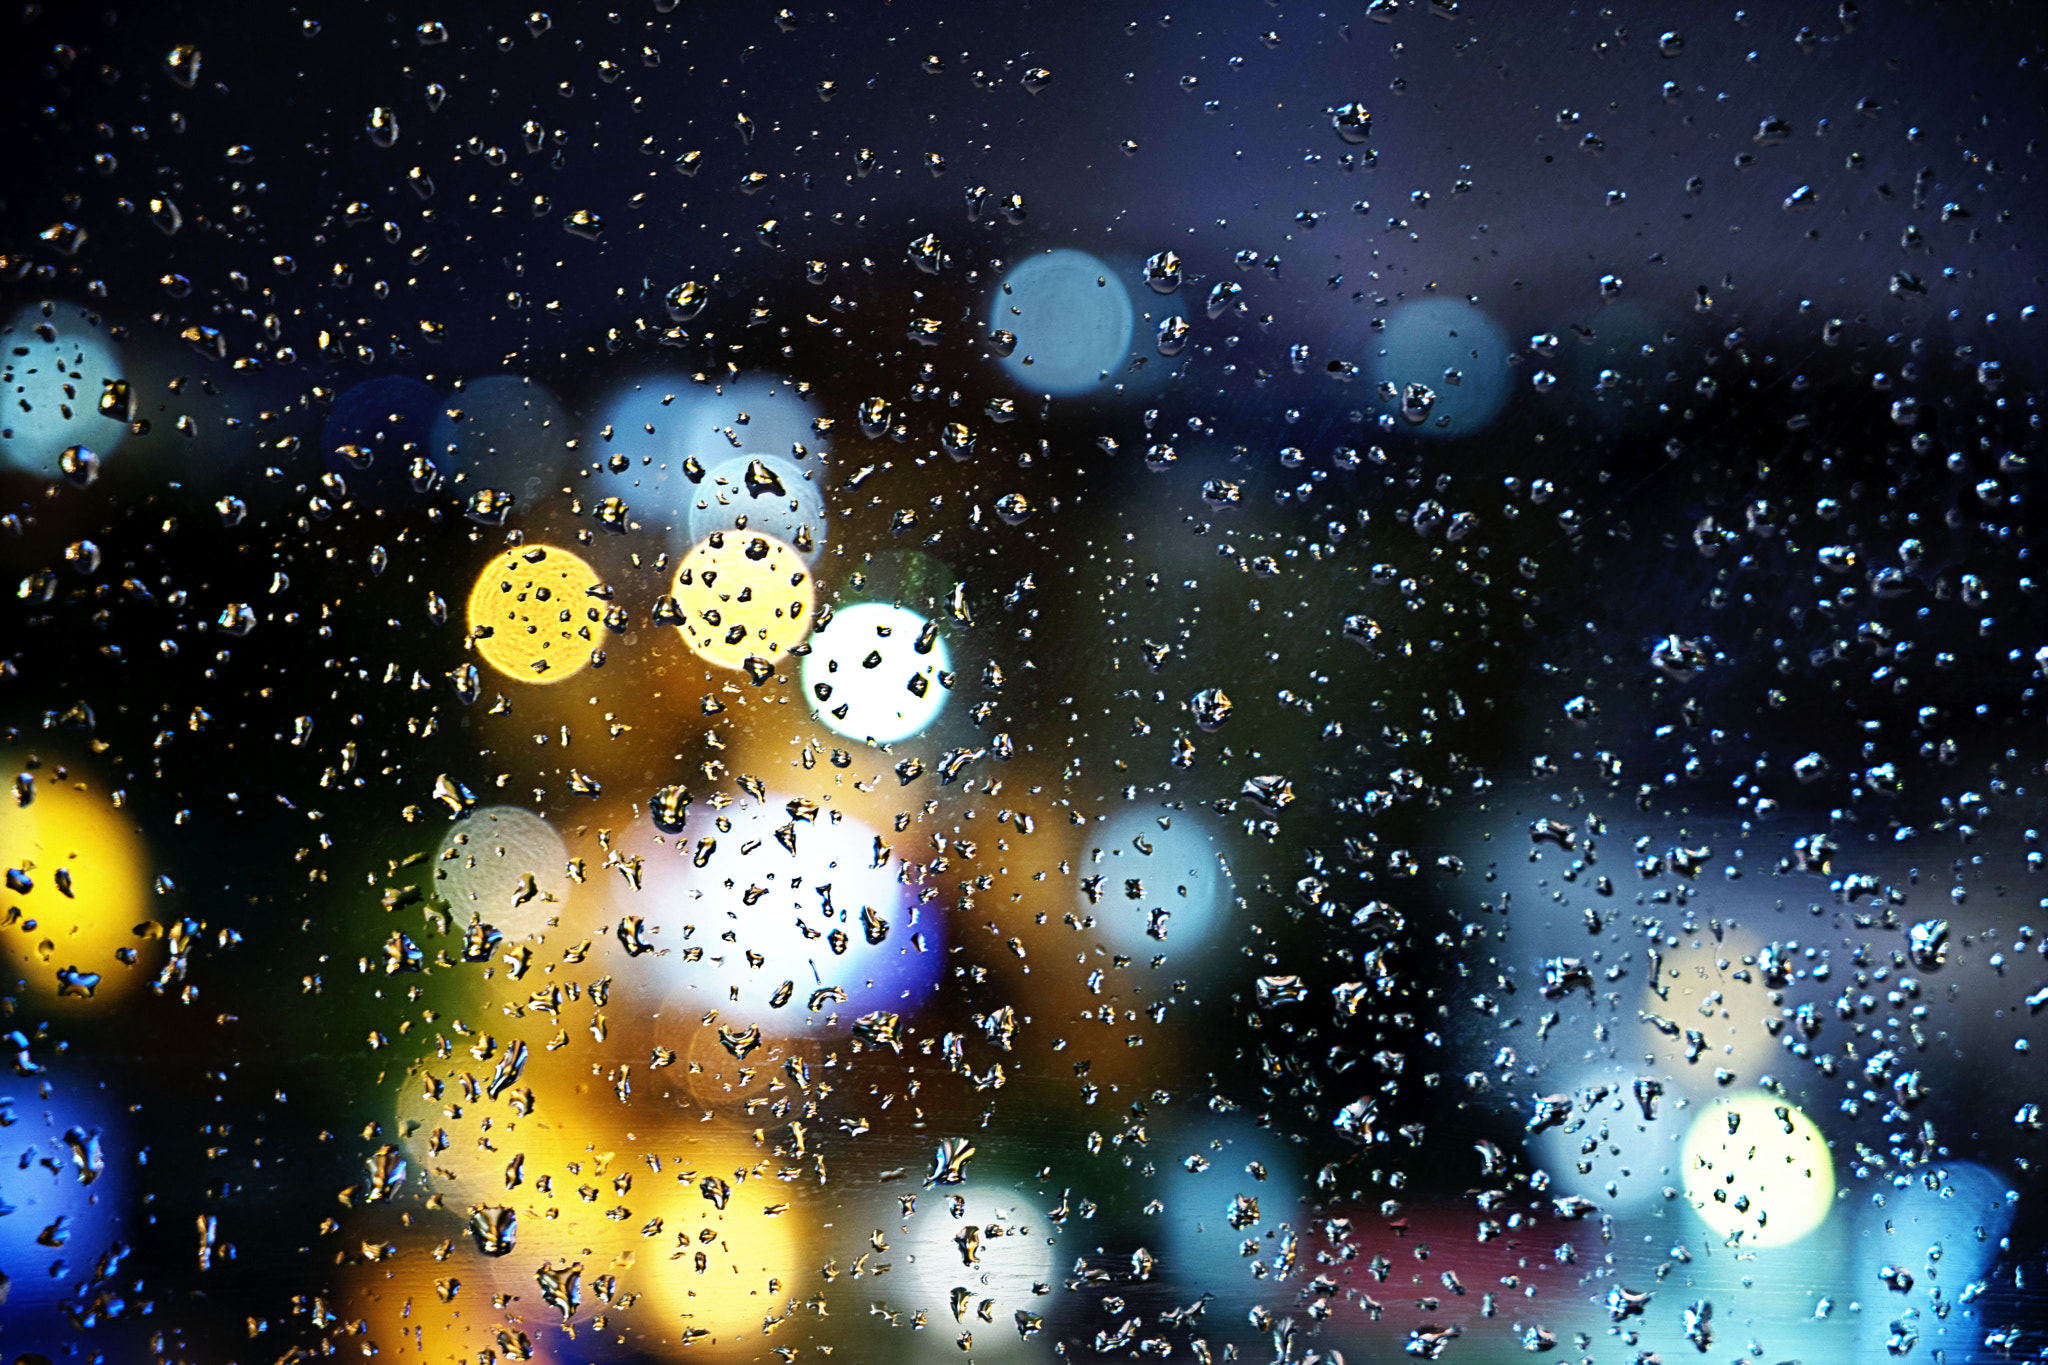 Raindrops on my window by Nime Cloud / 500px